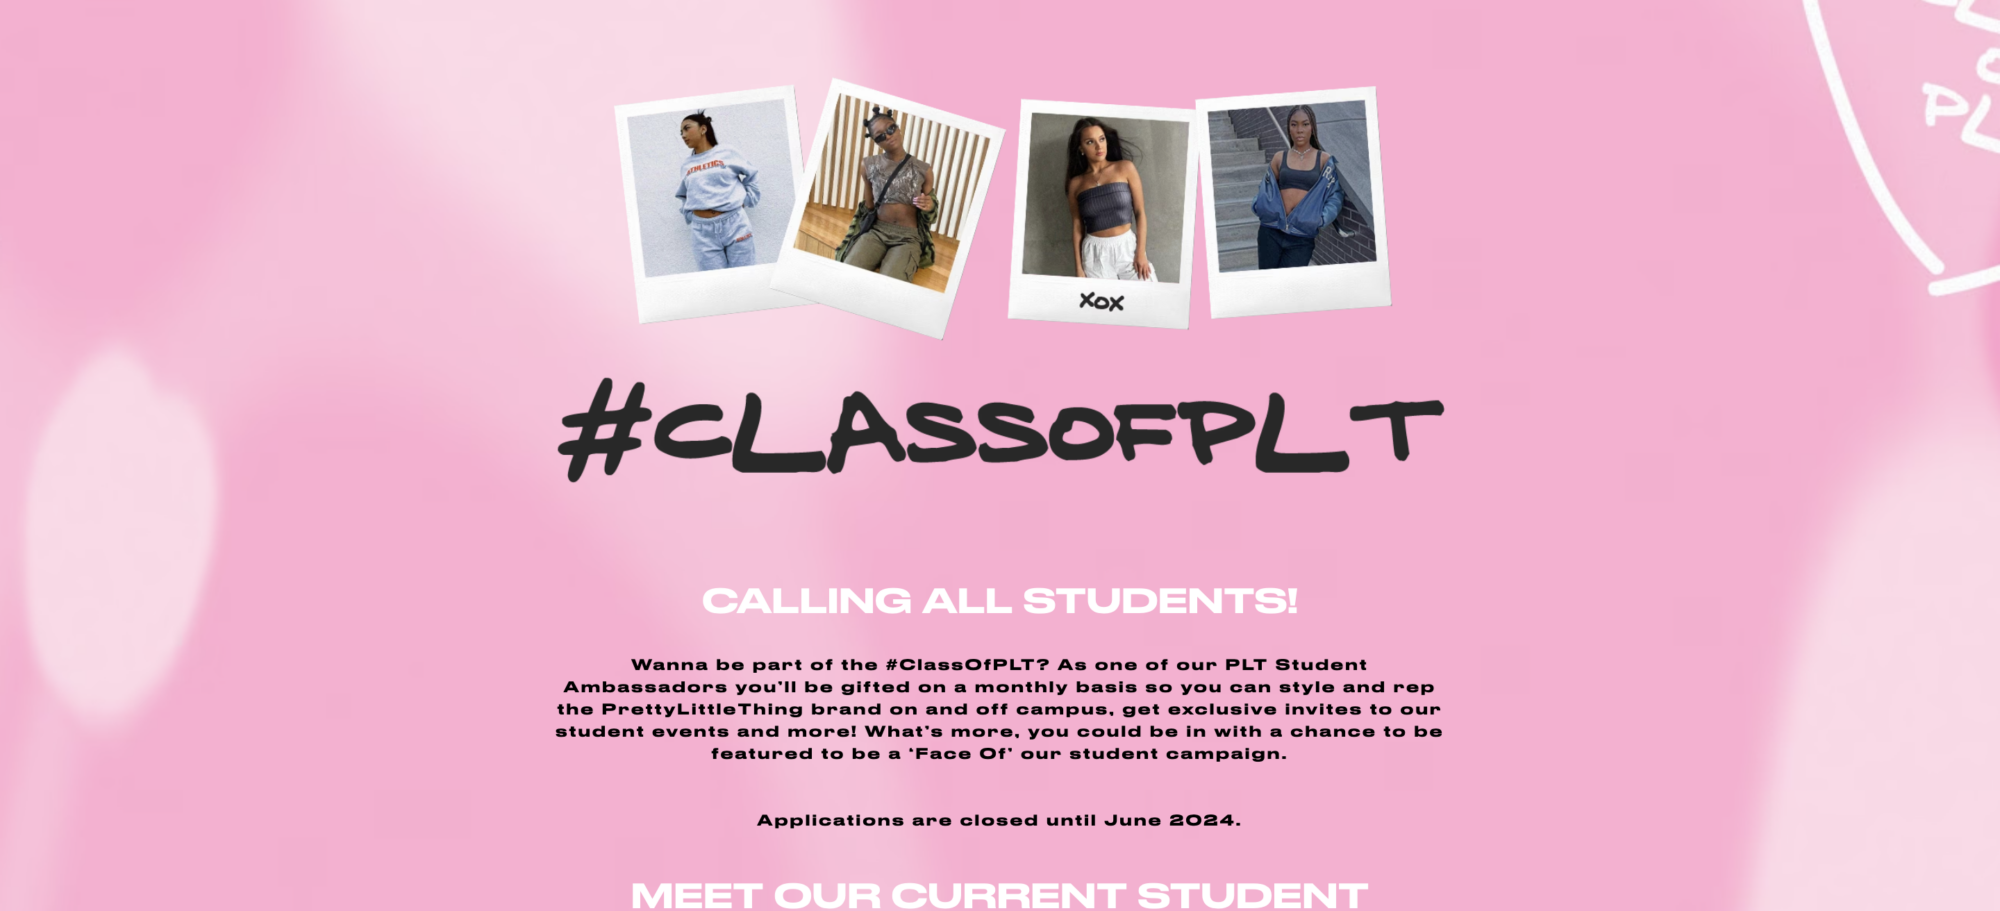 #CLASSOFPLT influencer program calls all students to represent PrettyLittleThing on social media